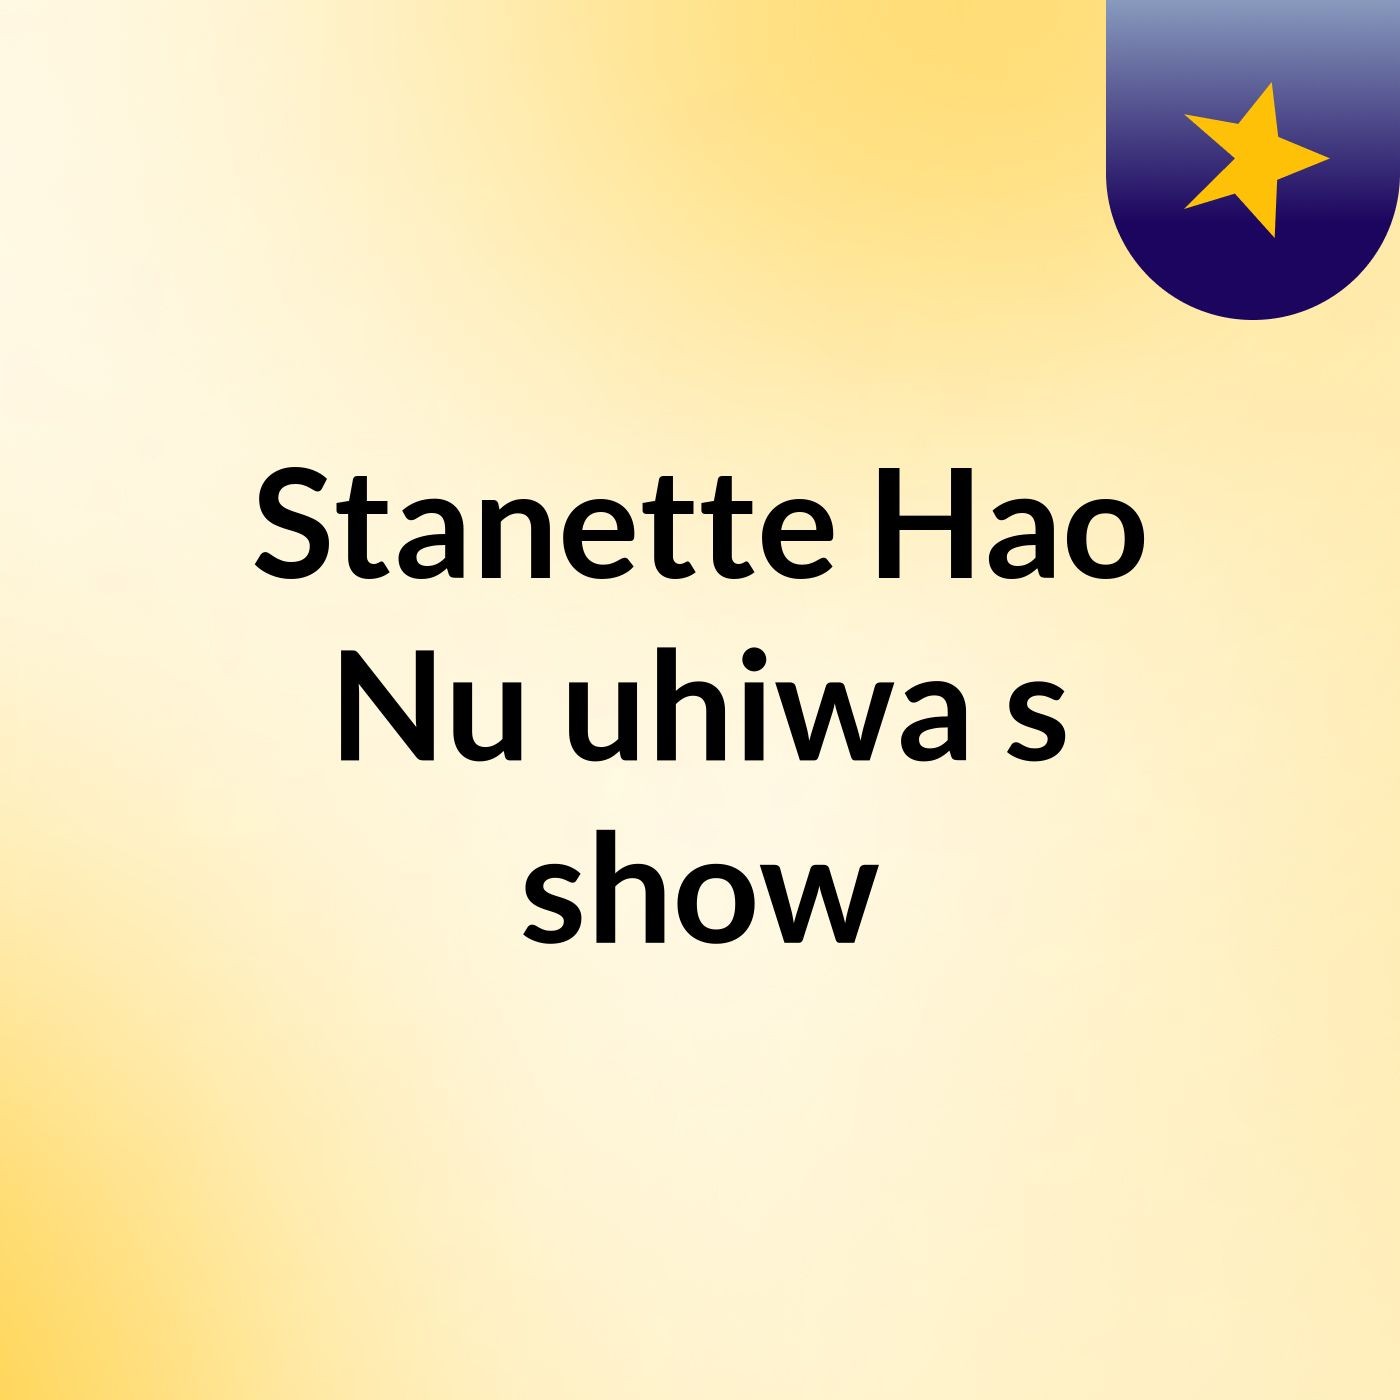 Stanette Hao Nu'uhiwa's show